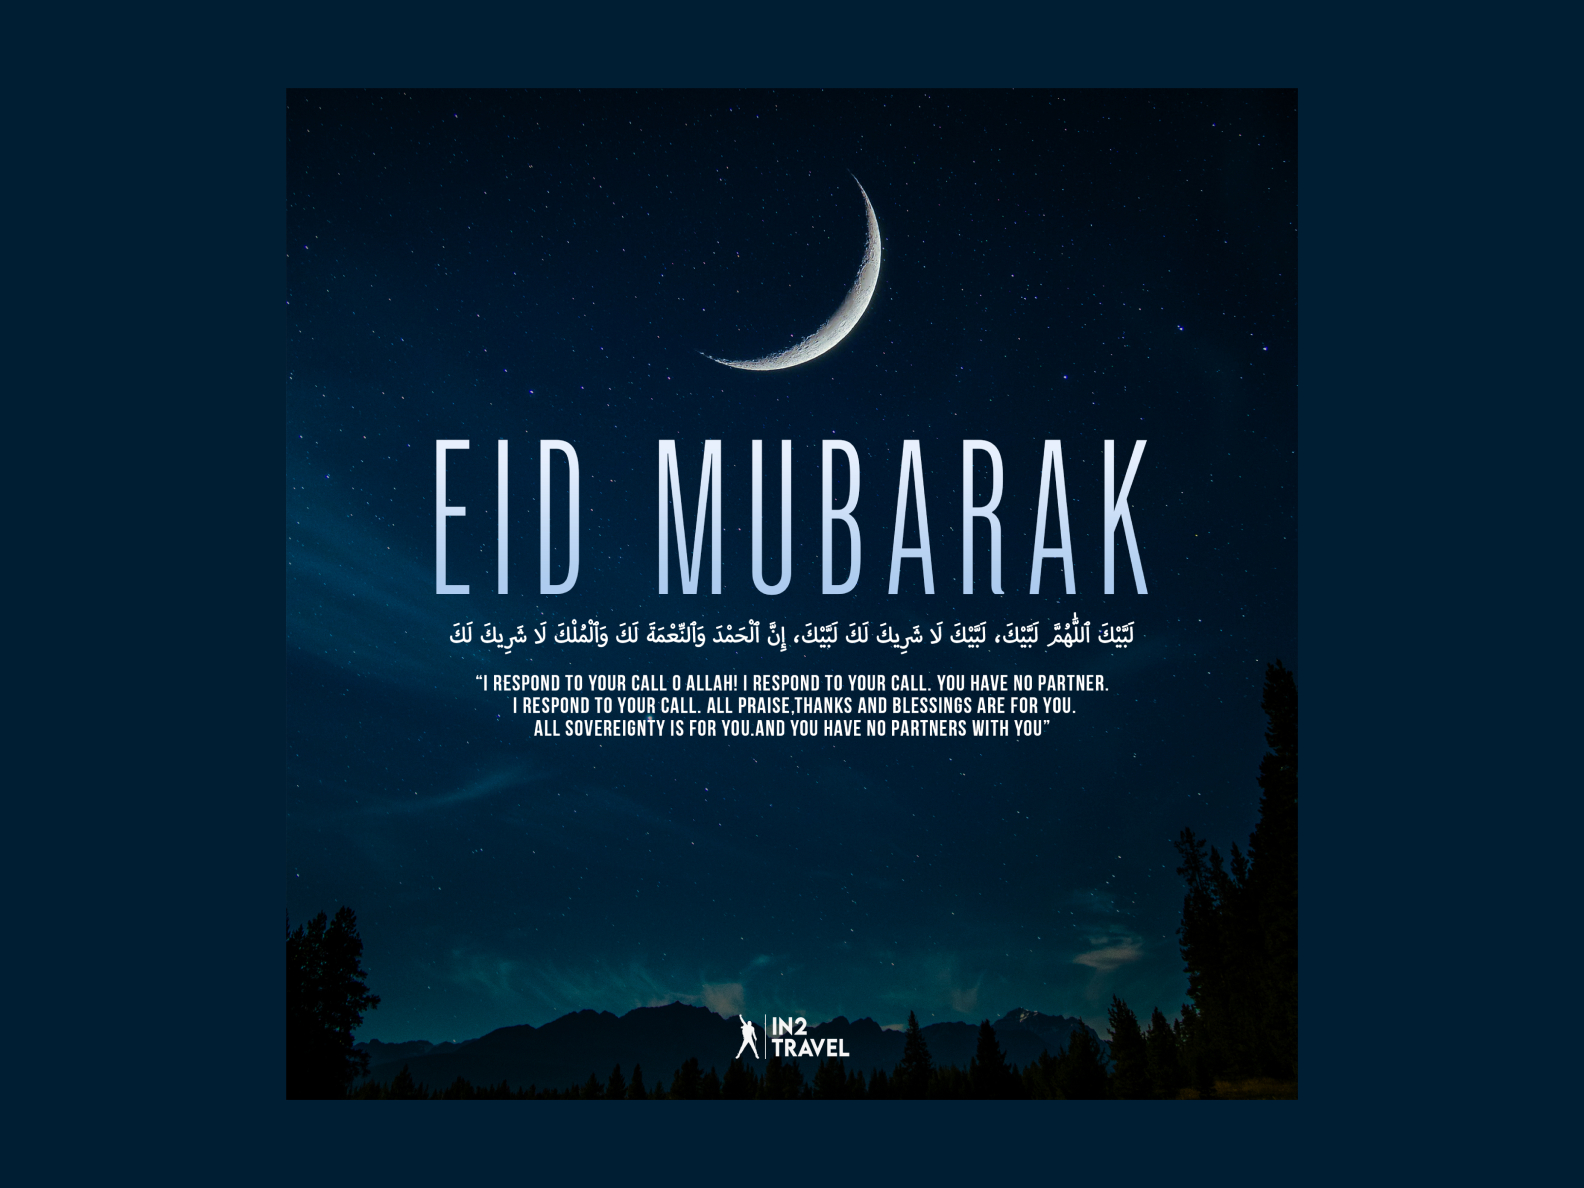 Eid Mubarak Social Media Banner by Rezuan Ahmed on Dribbble